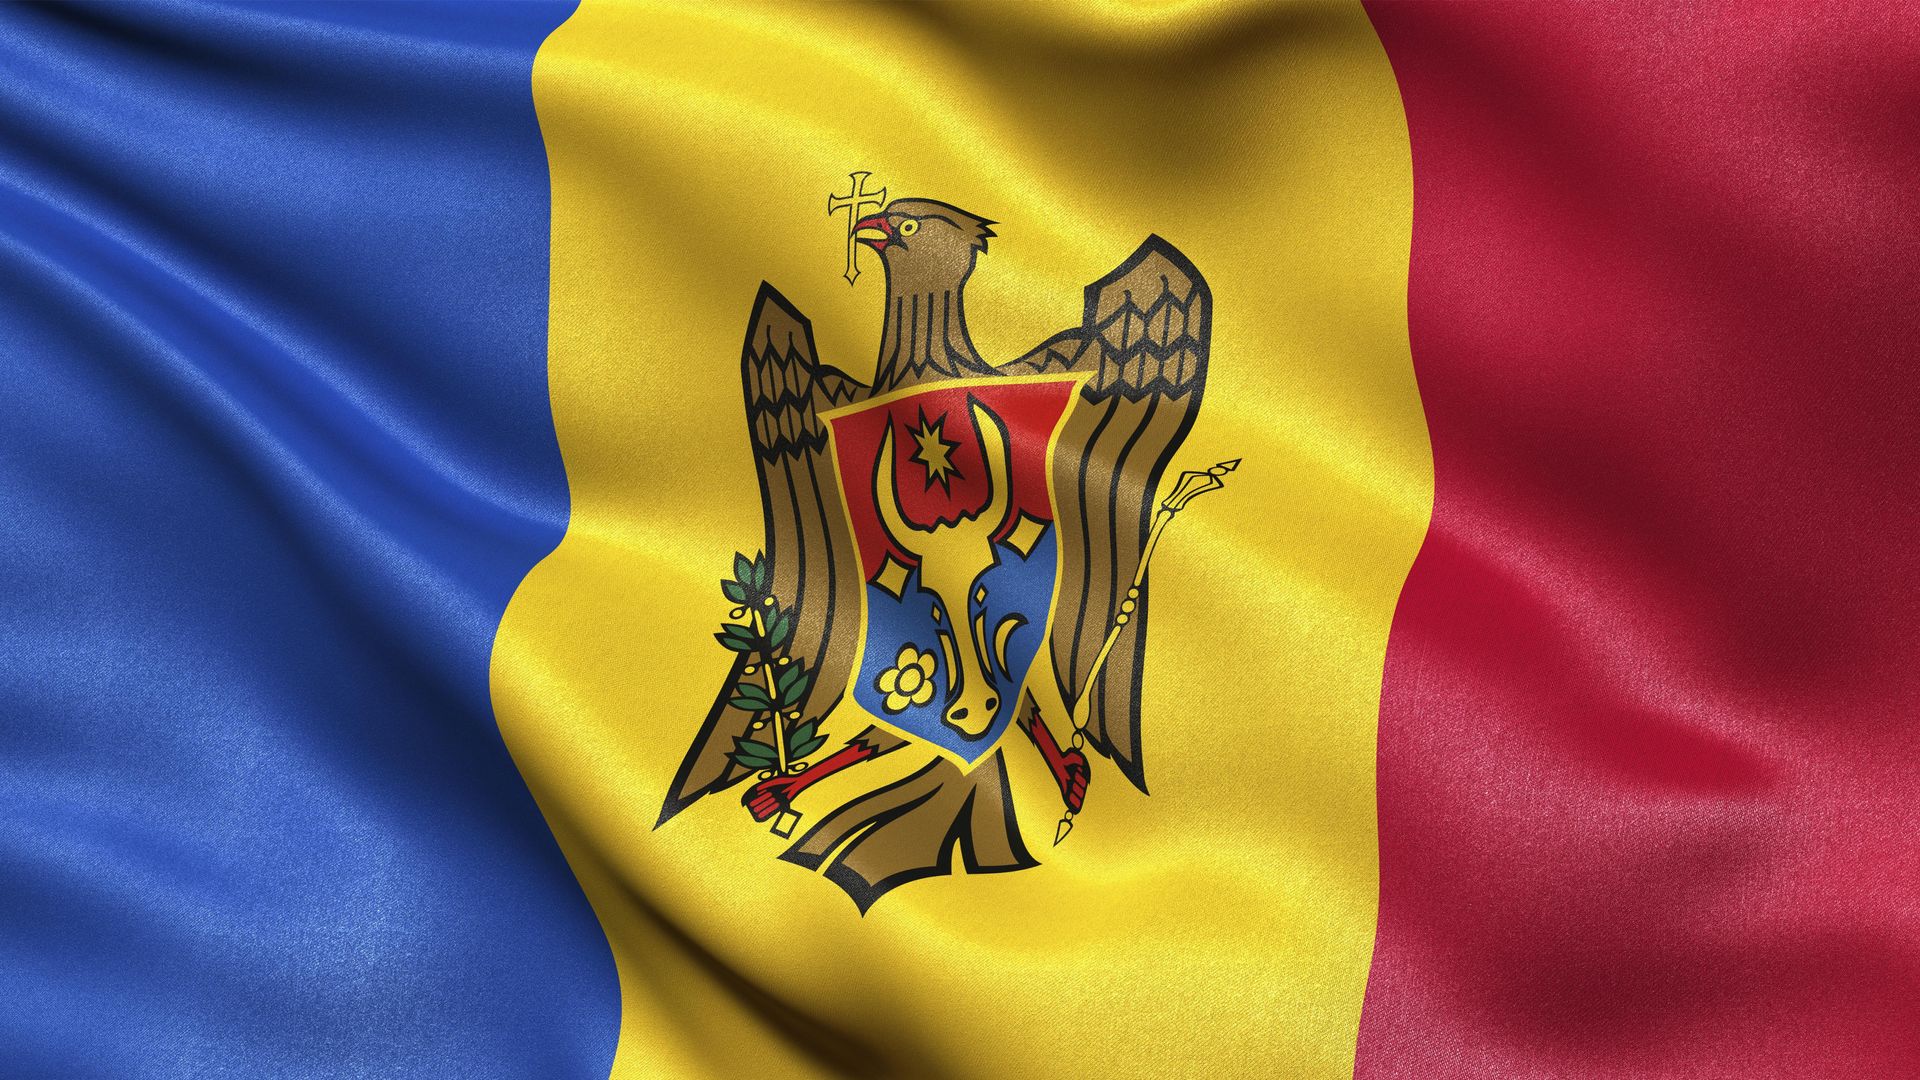 Republica moldova. Флаг Республики Молдова. Молдавия Кишинев флаг. Флаг Молдовы флаг Молдовы. Флаг Молдавии по 1859 году.